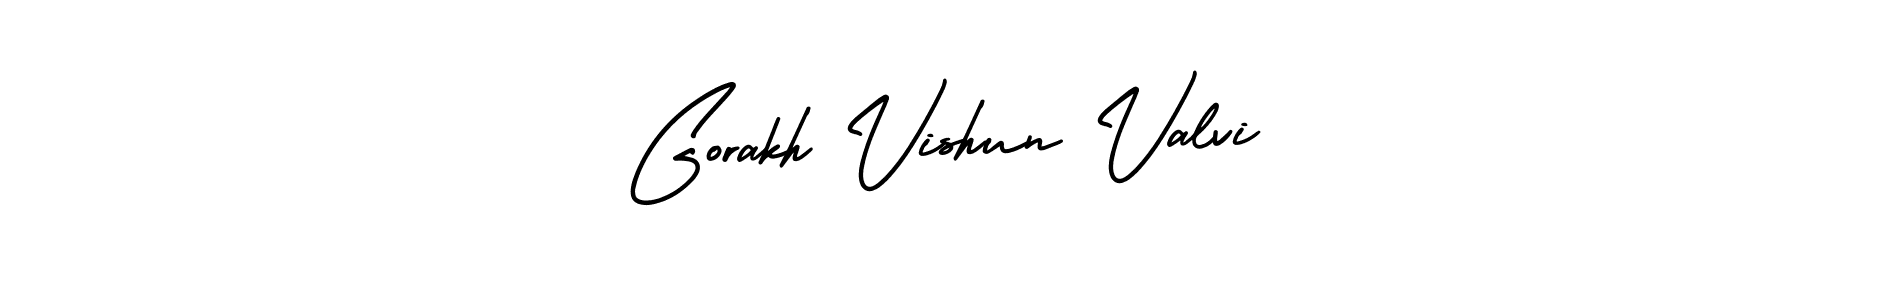 Design your own signature with our free online signature maker. With this signature software, you can create a handwritten (AmerikaSignatureDemo-Regular) signature for name Gorakh Vishun Valvi. Gorakh Vishun Valvi signature style 3 images and pictures png